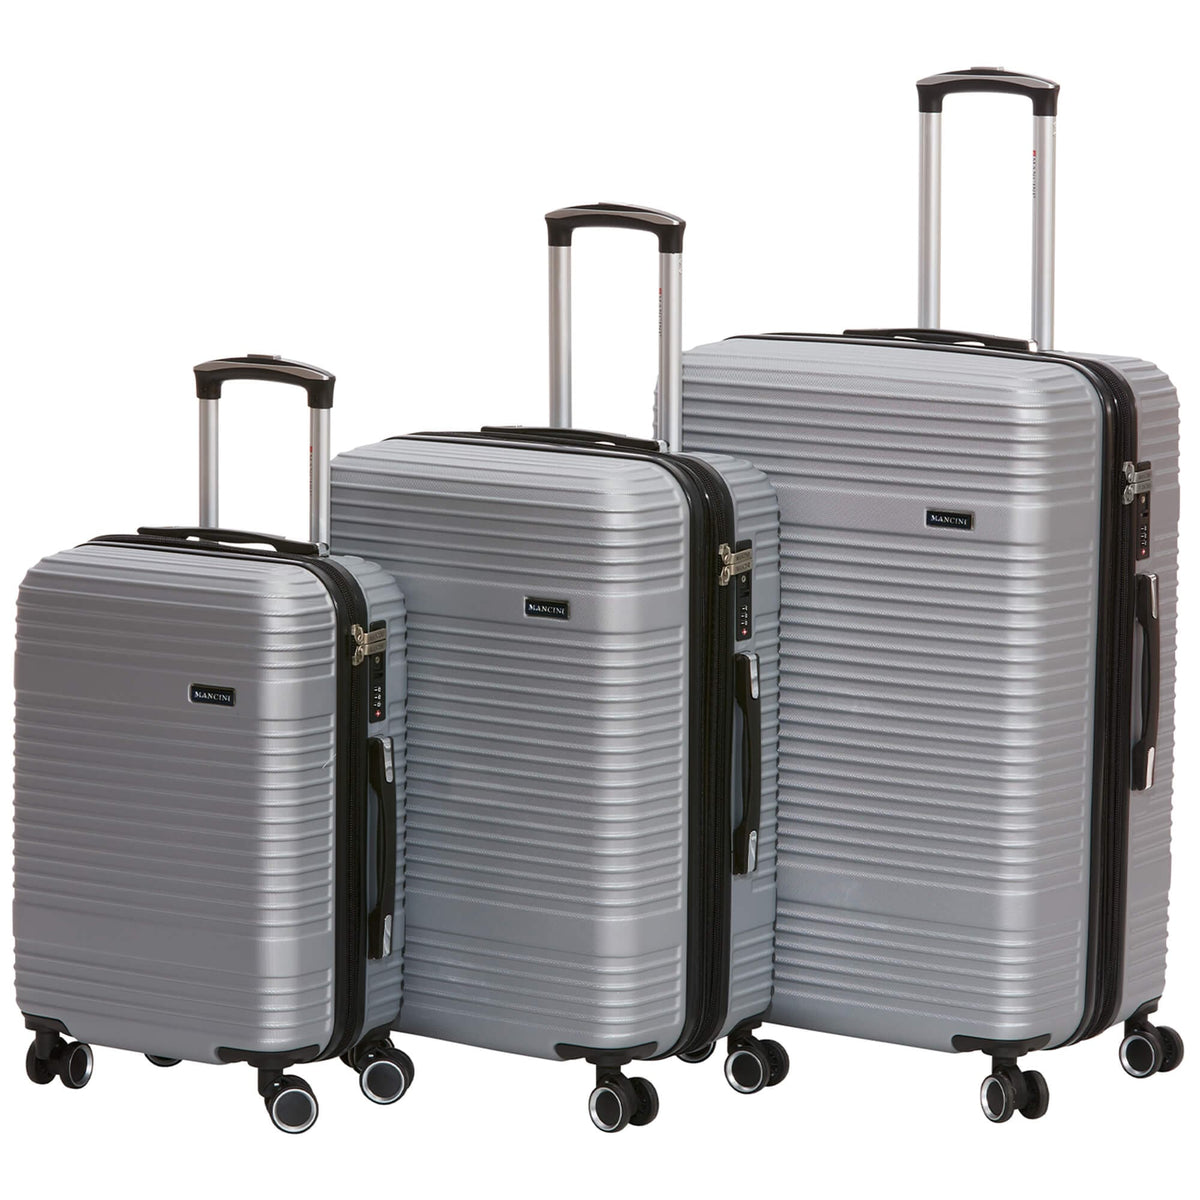 Mancini Perth Lightweight Spinner Luggage Set